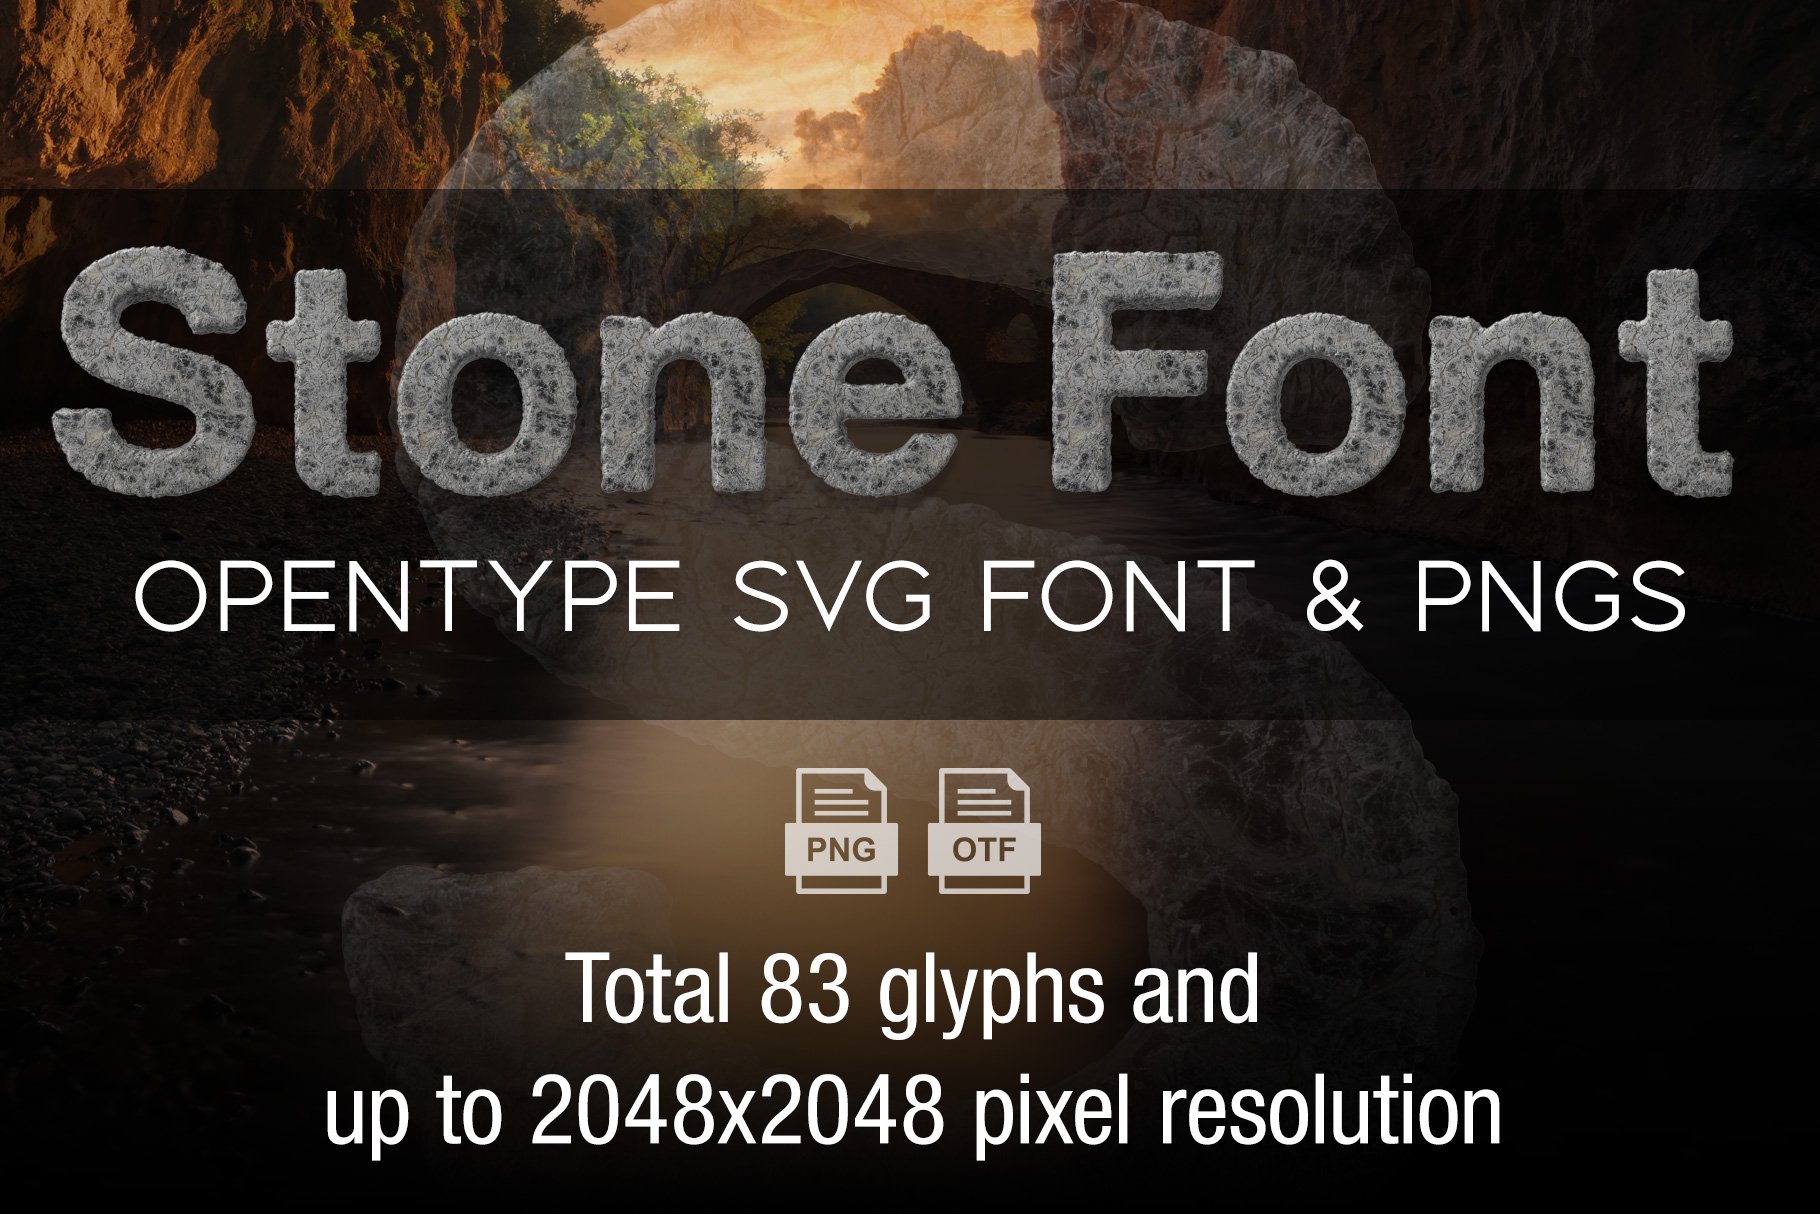 Stone - Color Bitmap Font cover image.